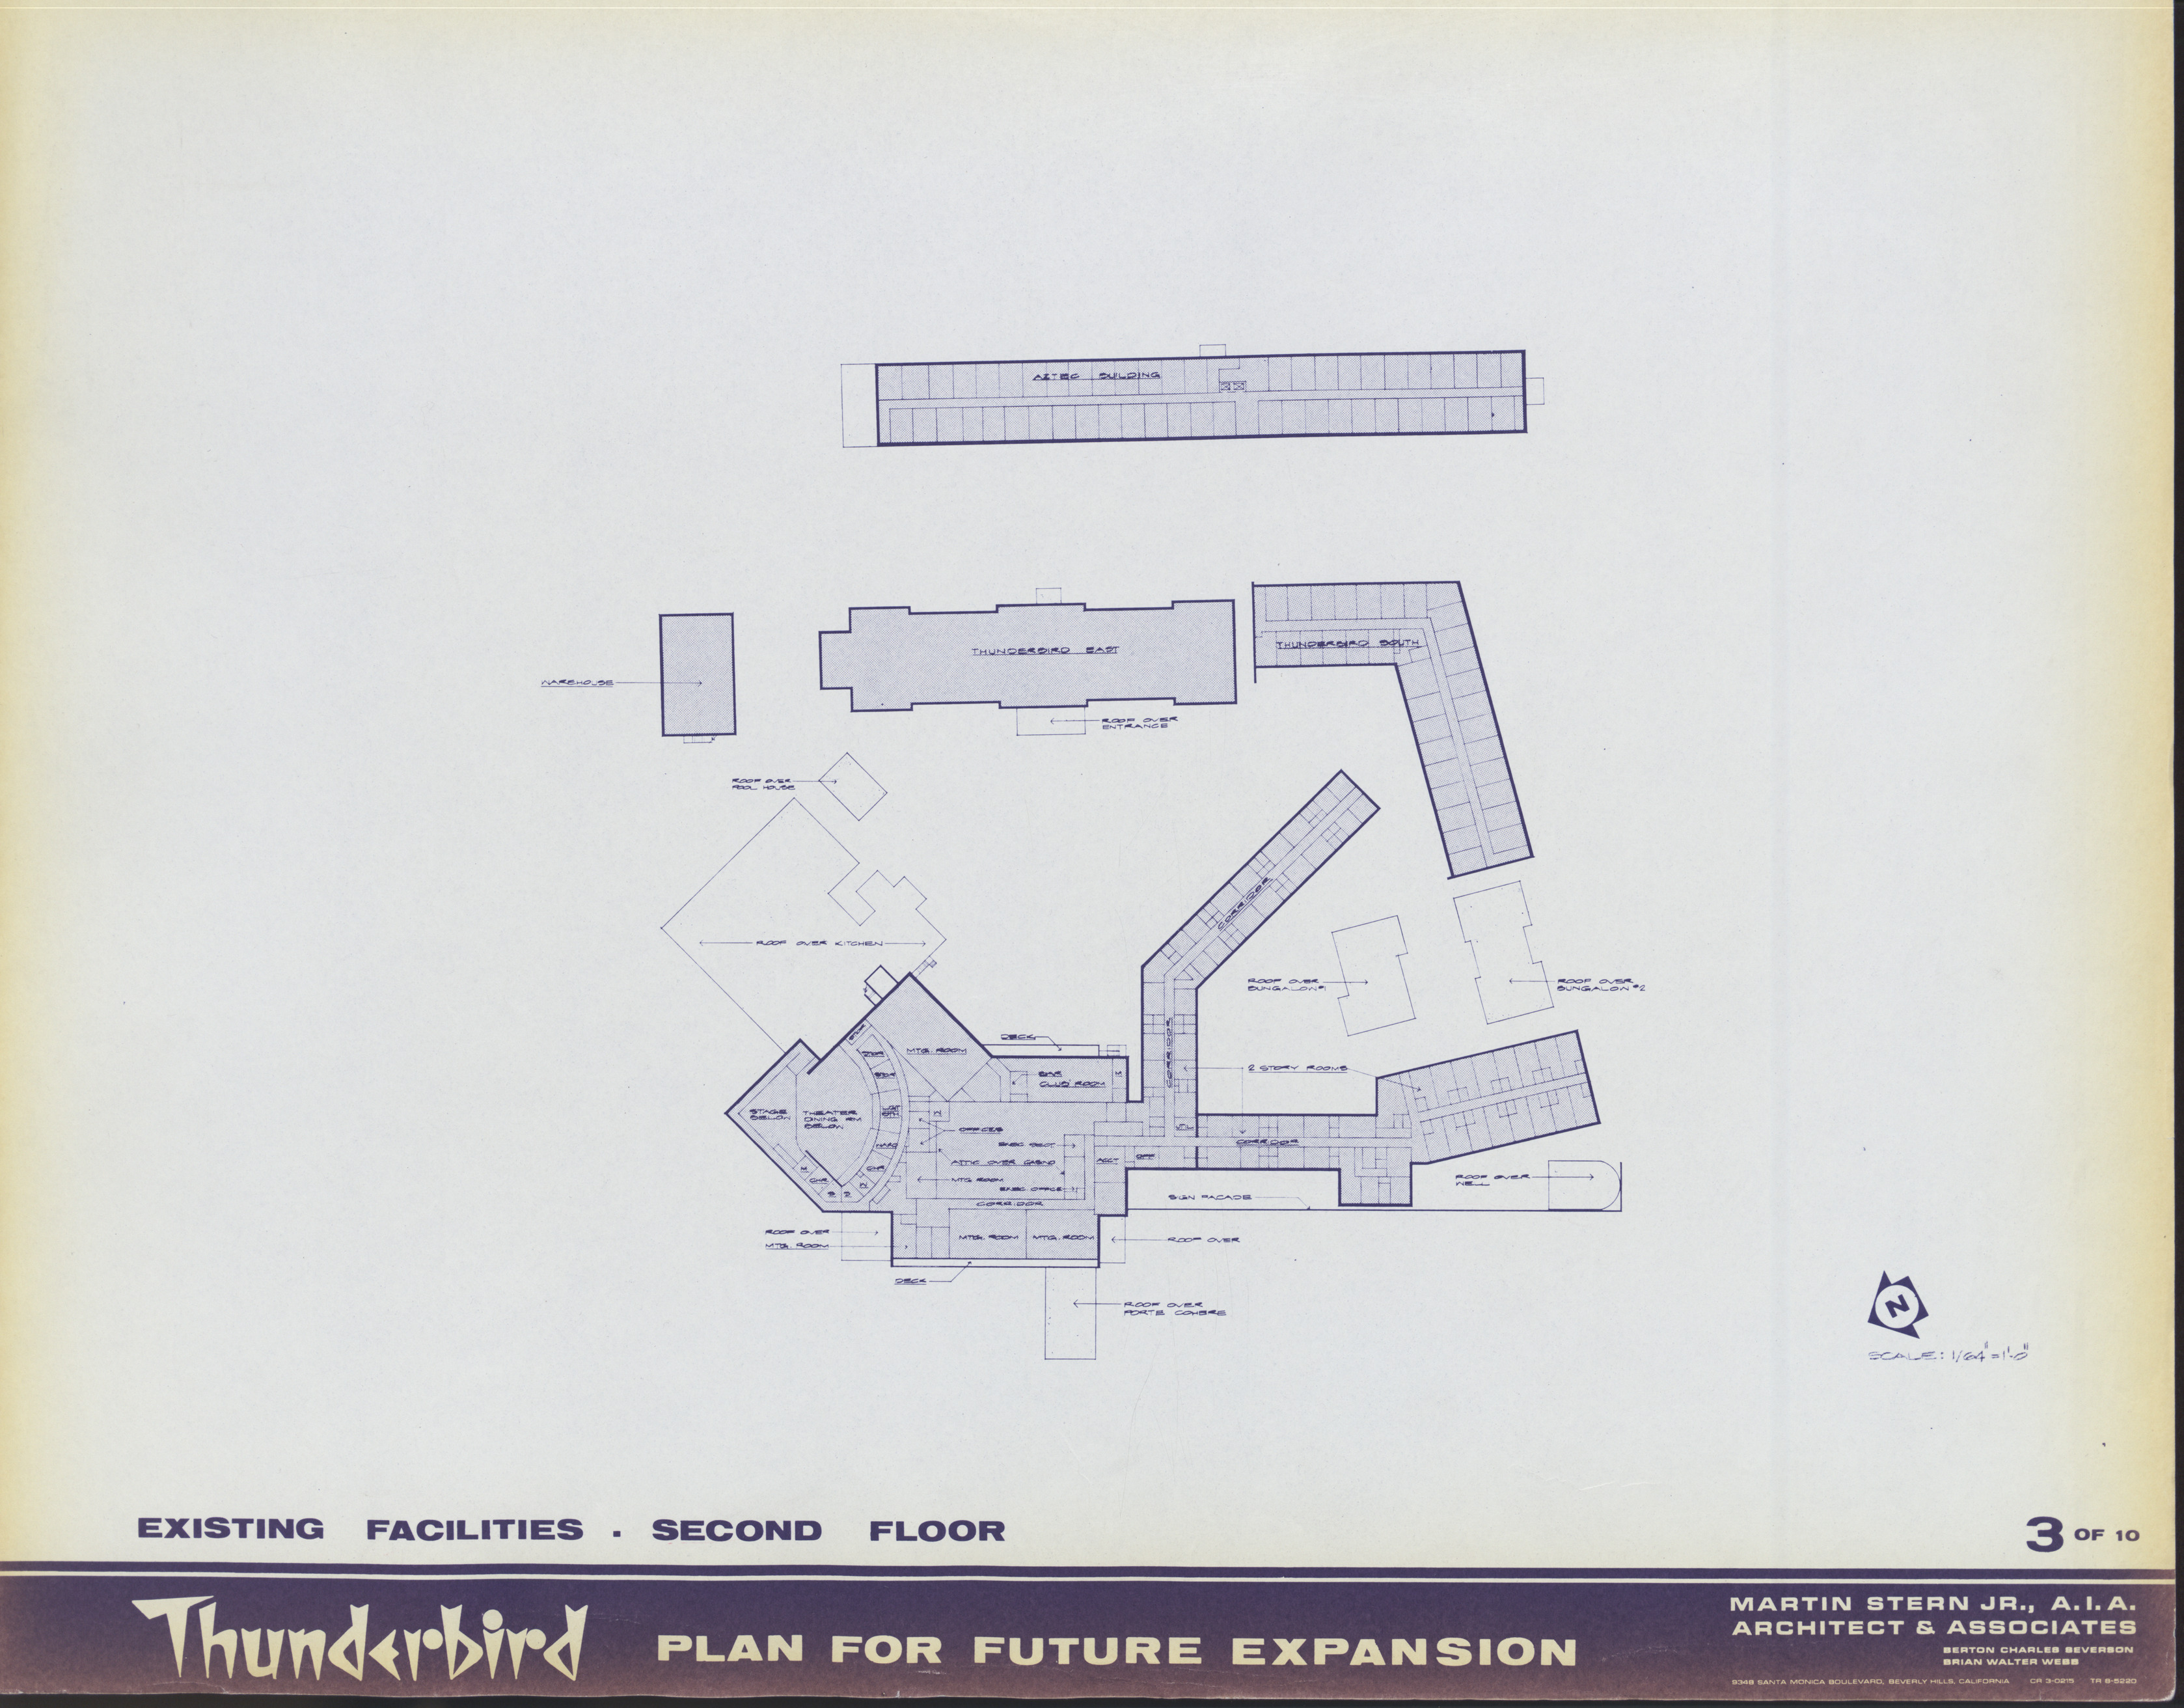 Thunderbird Plan for Future Expansion Proposal, image 3